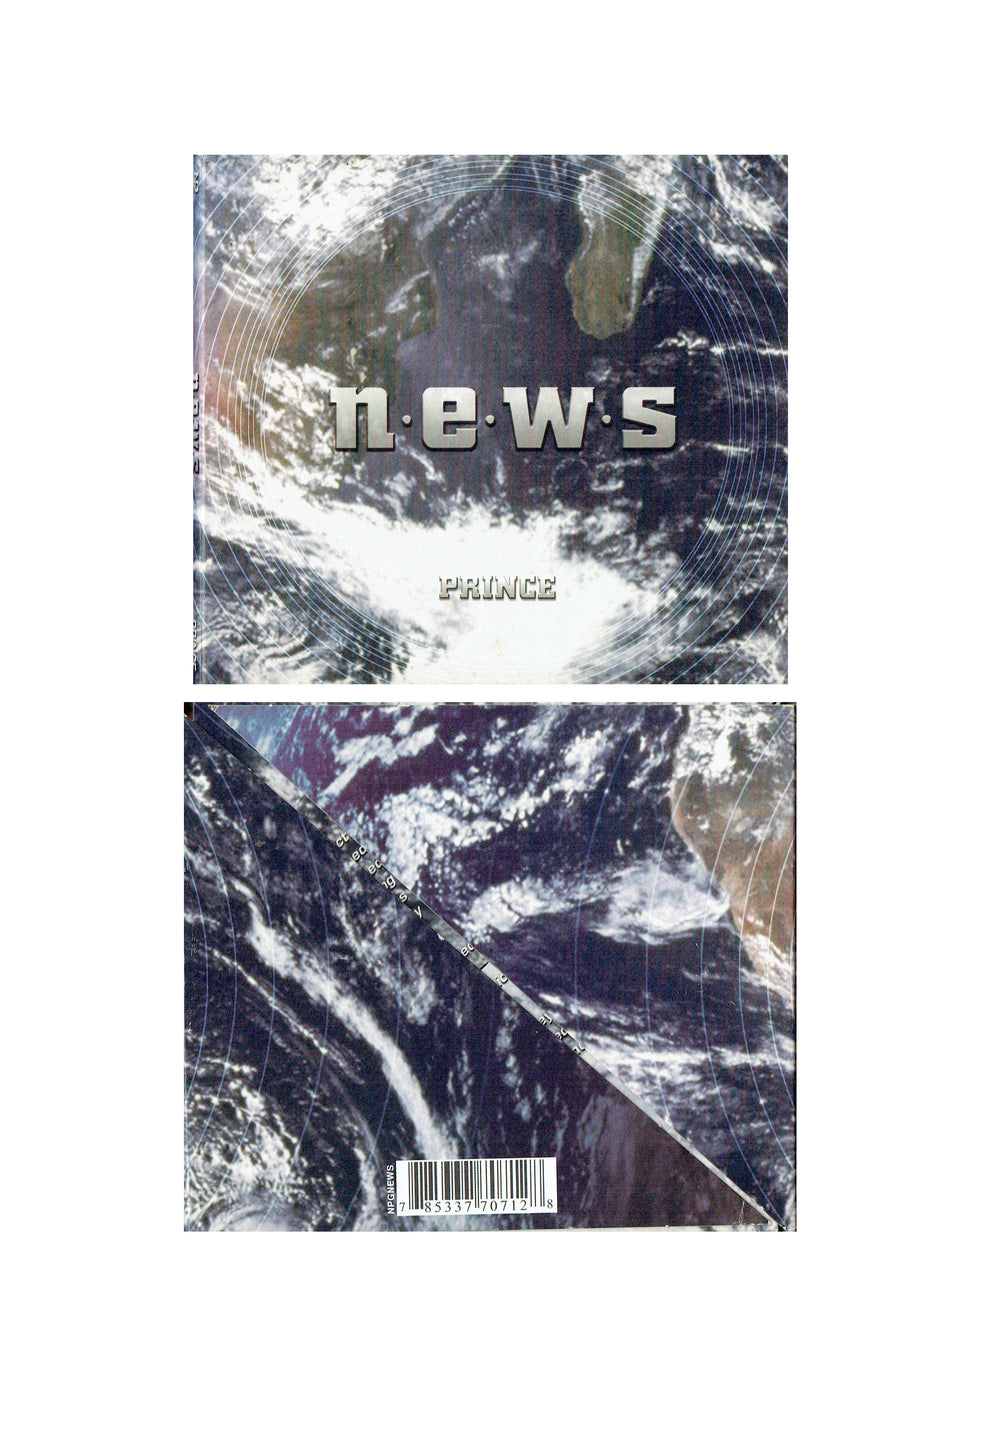 Prince – N.E.W.S CD Album Fold Out Case NPG Records Preloved: 2003